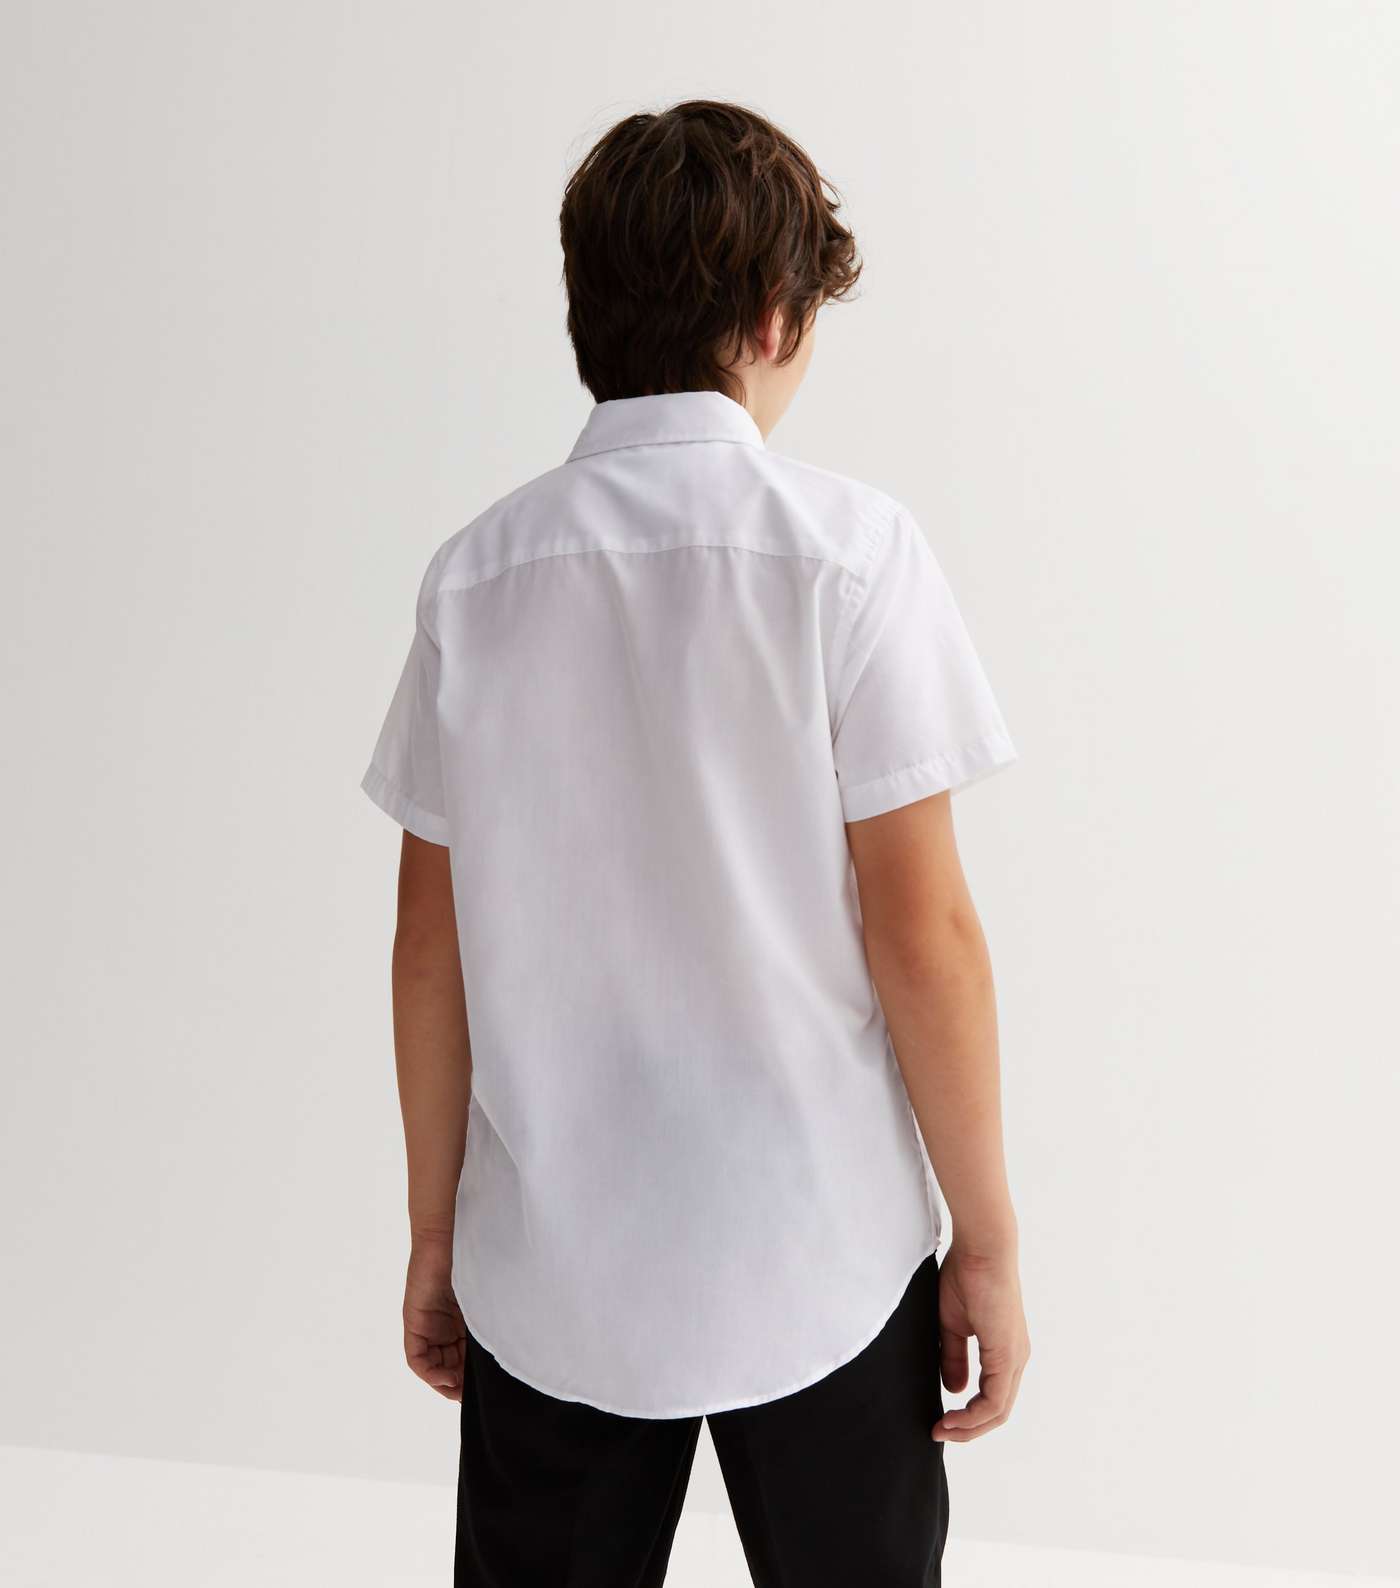 Boys 2 Pack White Short Sleeve Easy Care School Shirts Image 4